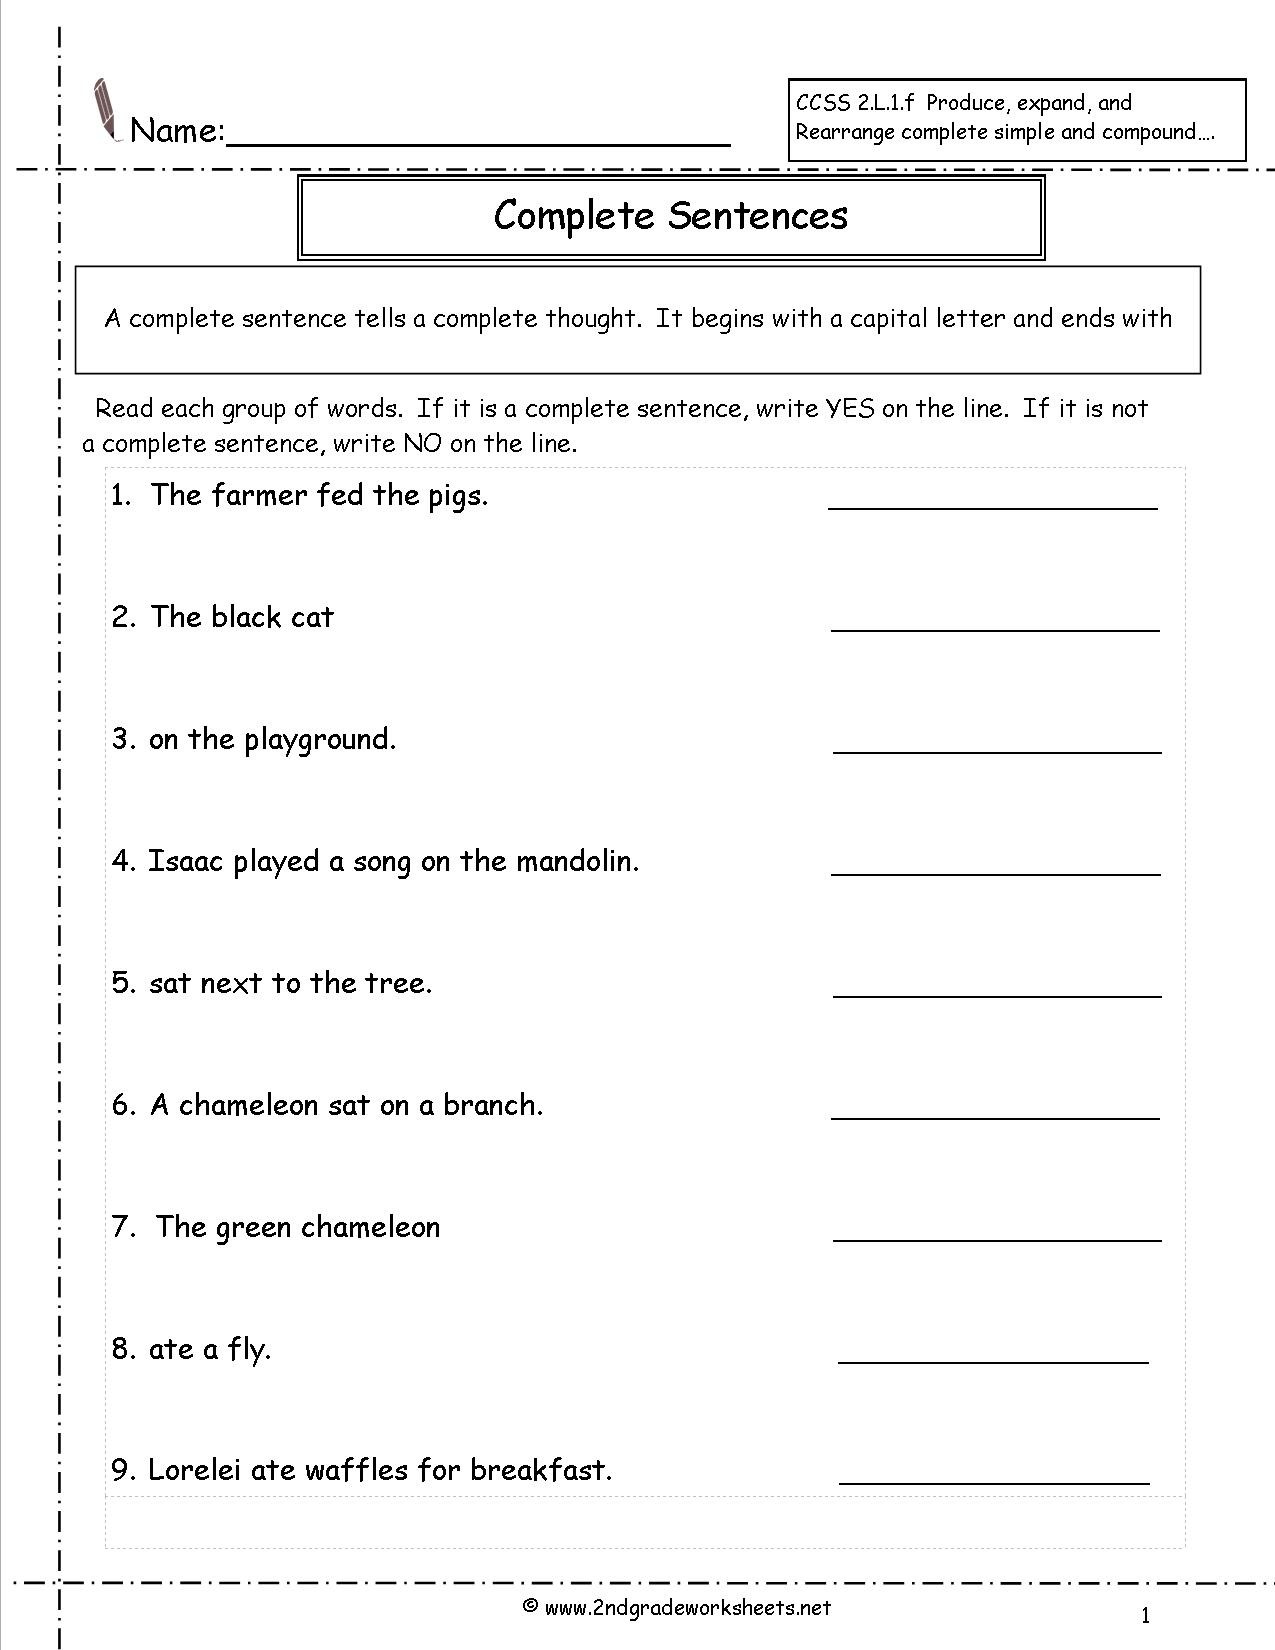 Complete Sentences Worksheets 4th Grade Second Grade Sentences Worksheets Ccss 2 L 1 F Worksheets